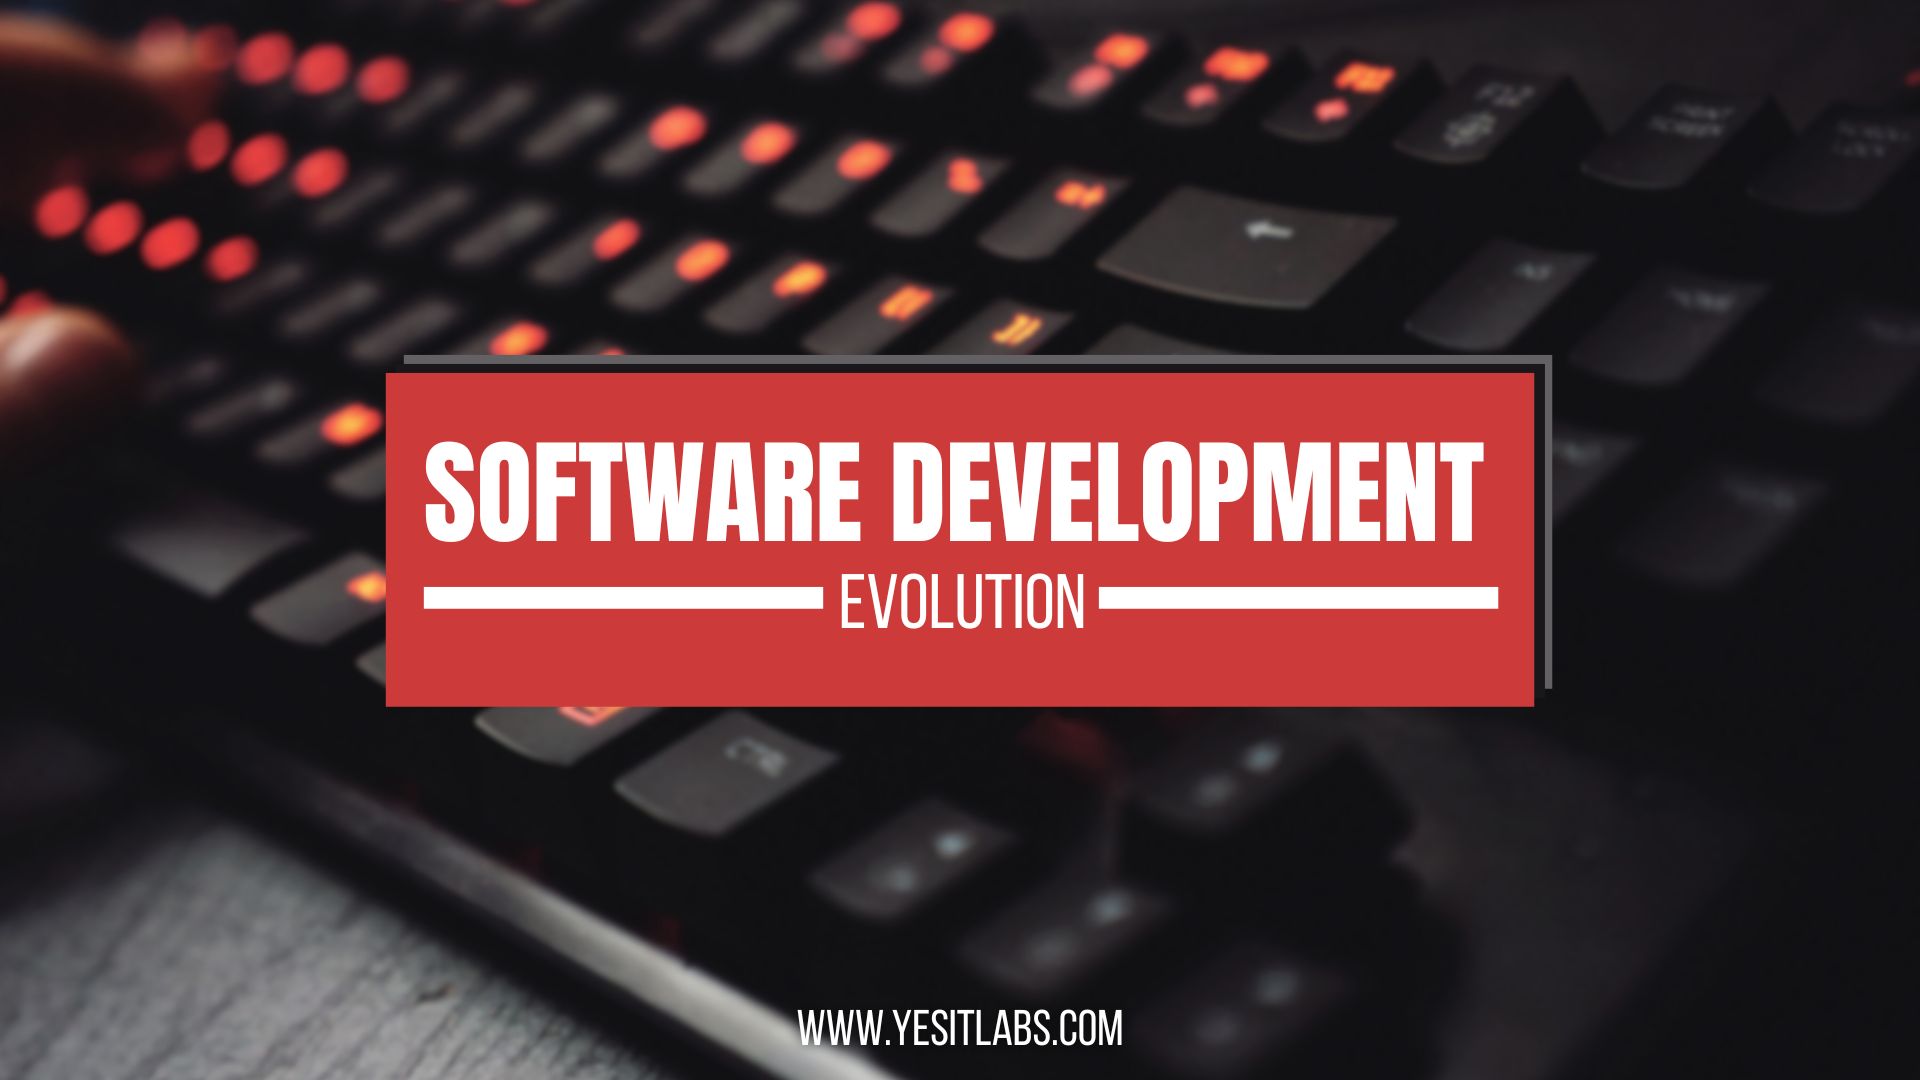 Evolution of Software Development: From Hardware to Methodologies